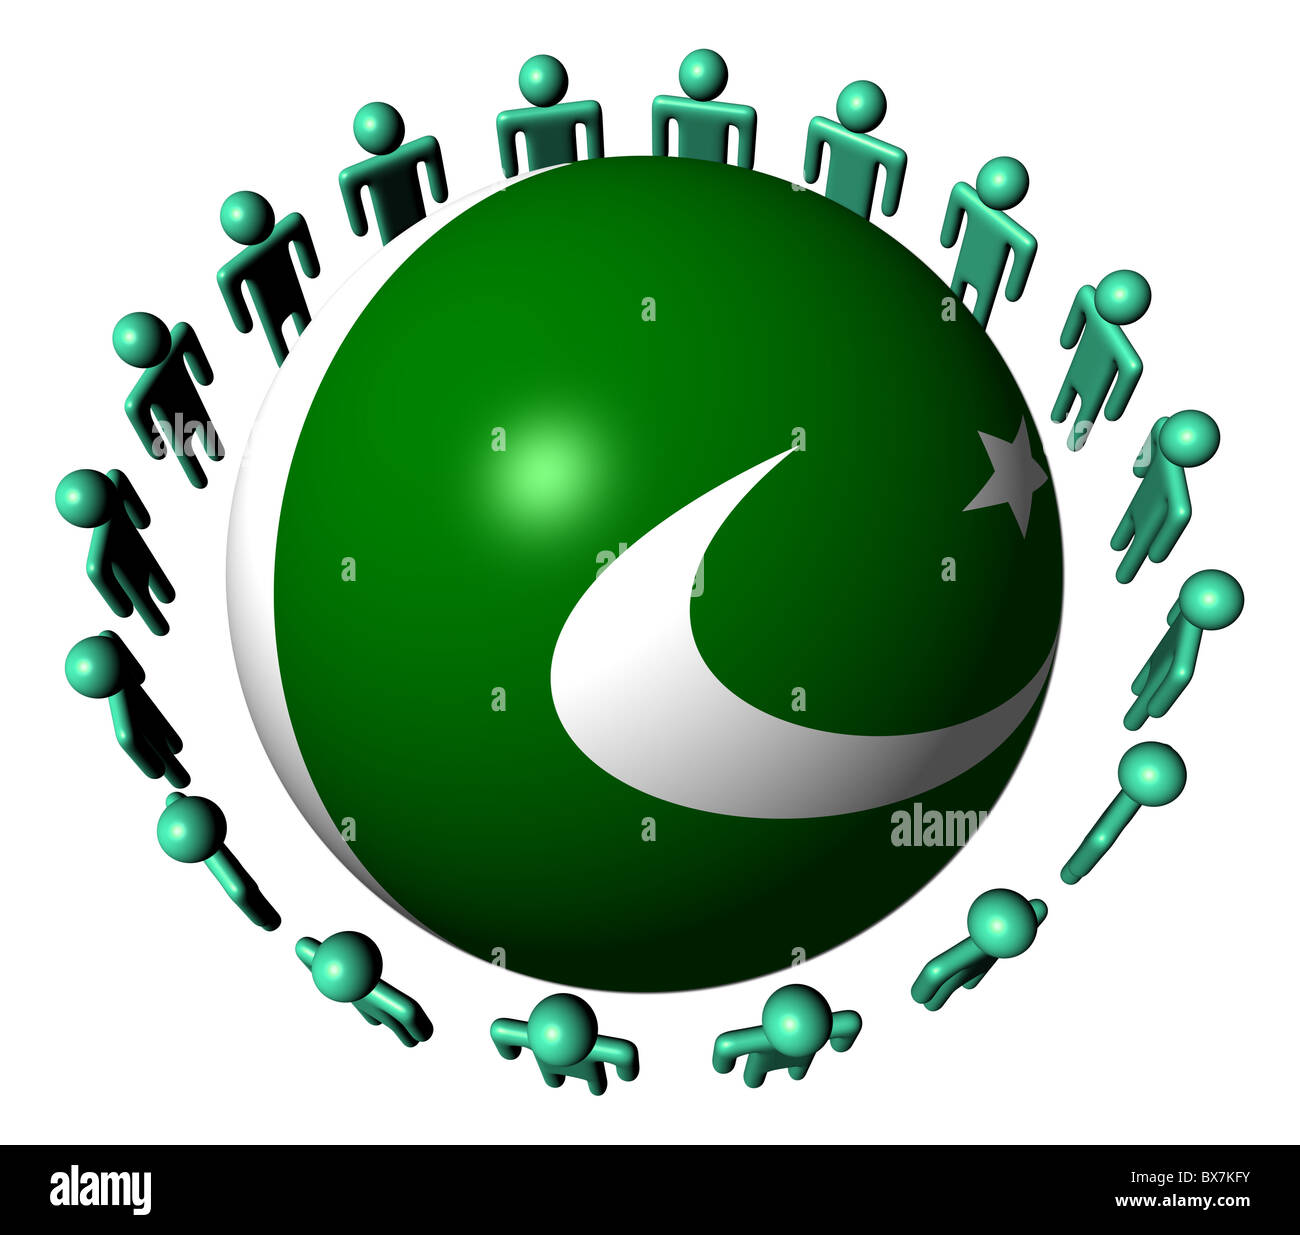 Circle of abstract people around Pakistani flag sphere illustration Stock Photo